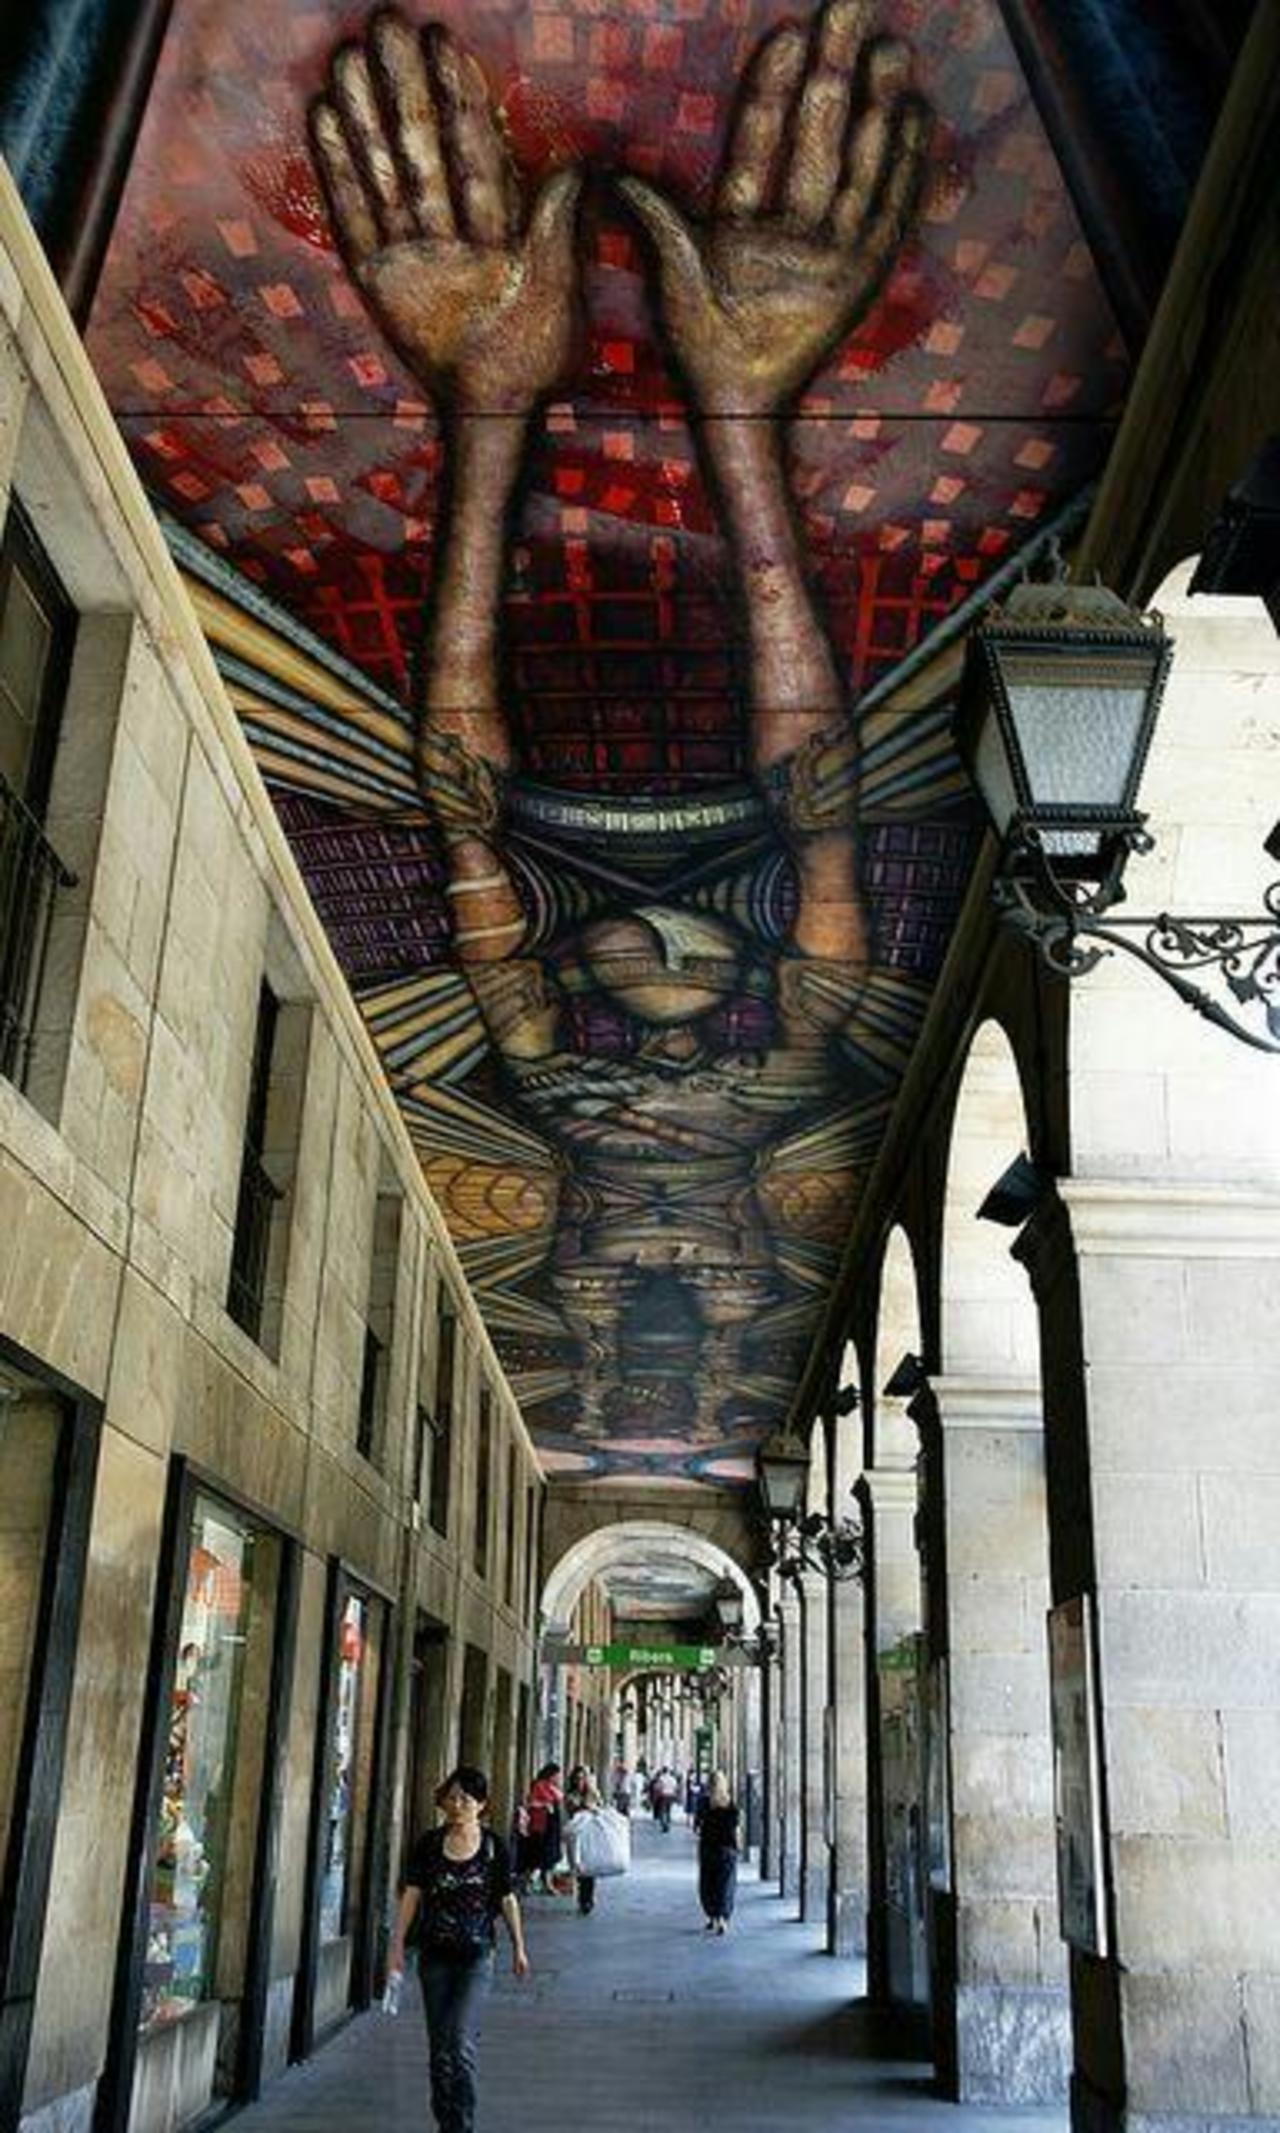 #artwork by DSC9766 in bilbao 
#art #streetart #graffiti #Mural #urbanart #ceilings 
found on +Flickr http://t.co/rZCC1UhzJ5